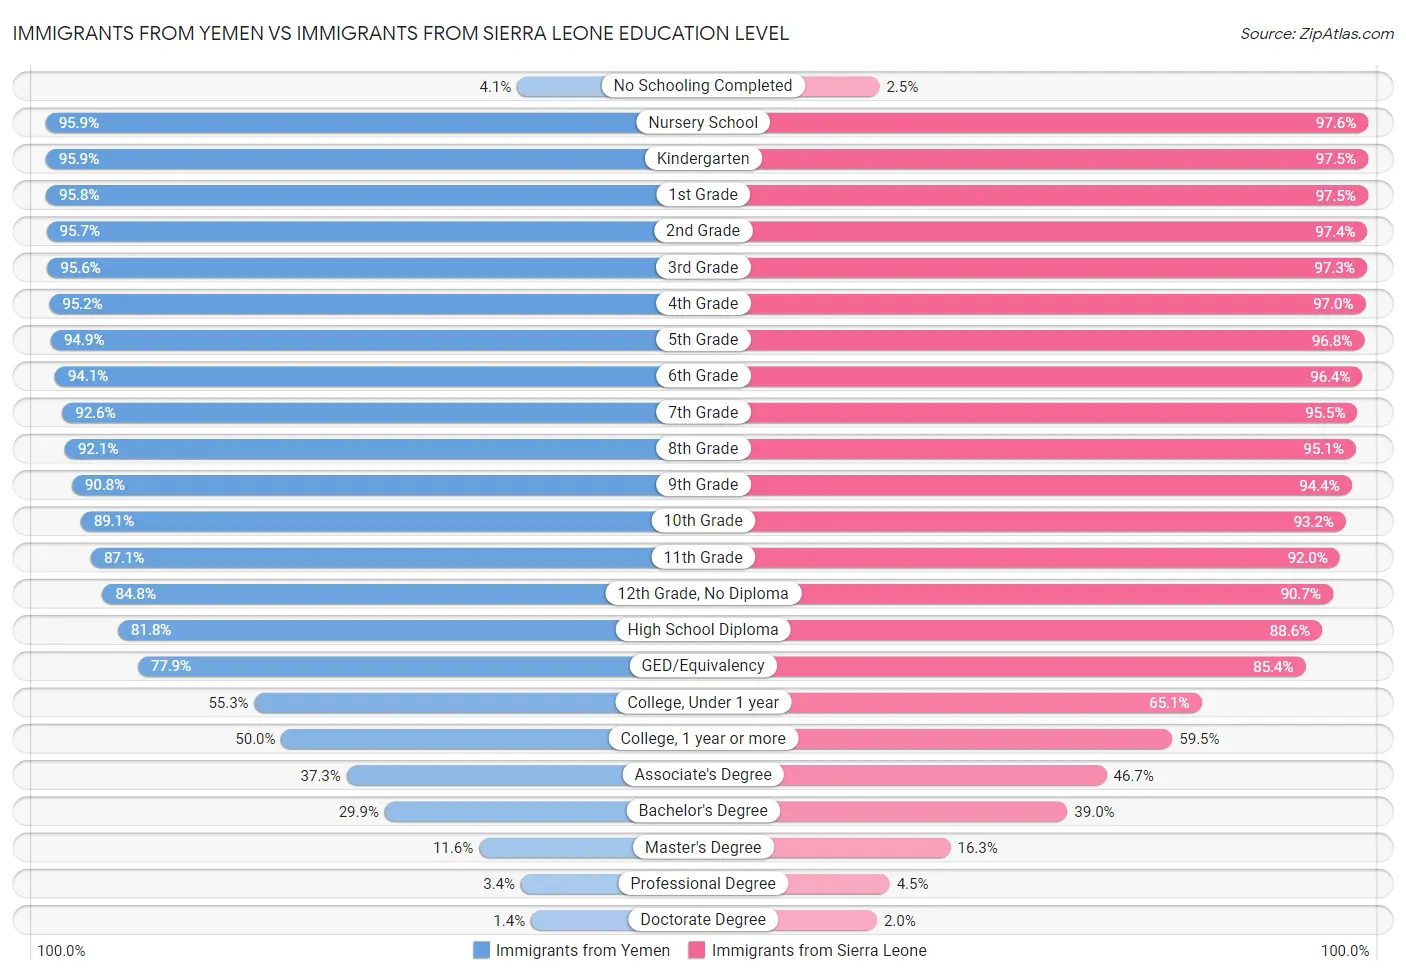 Immigrants from Yemen vs Immigrants from Sierra Leone Education Level